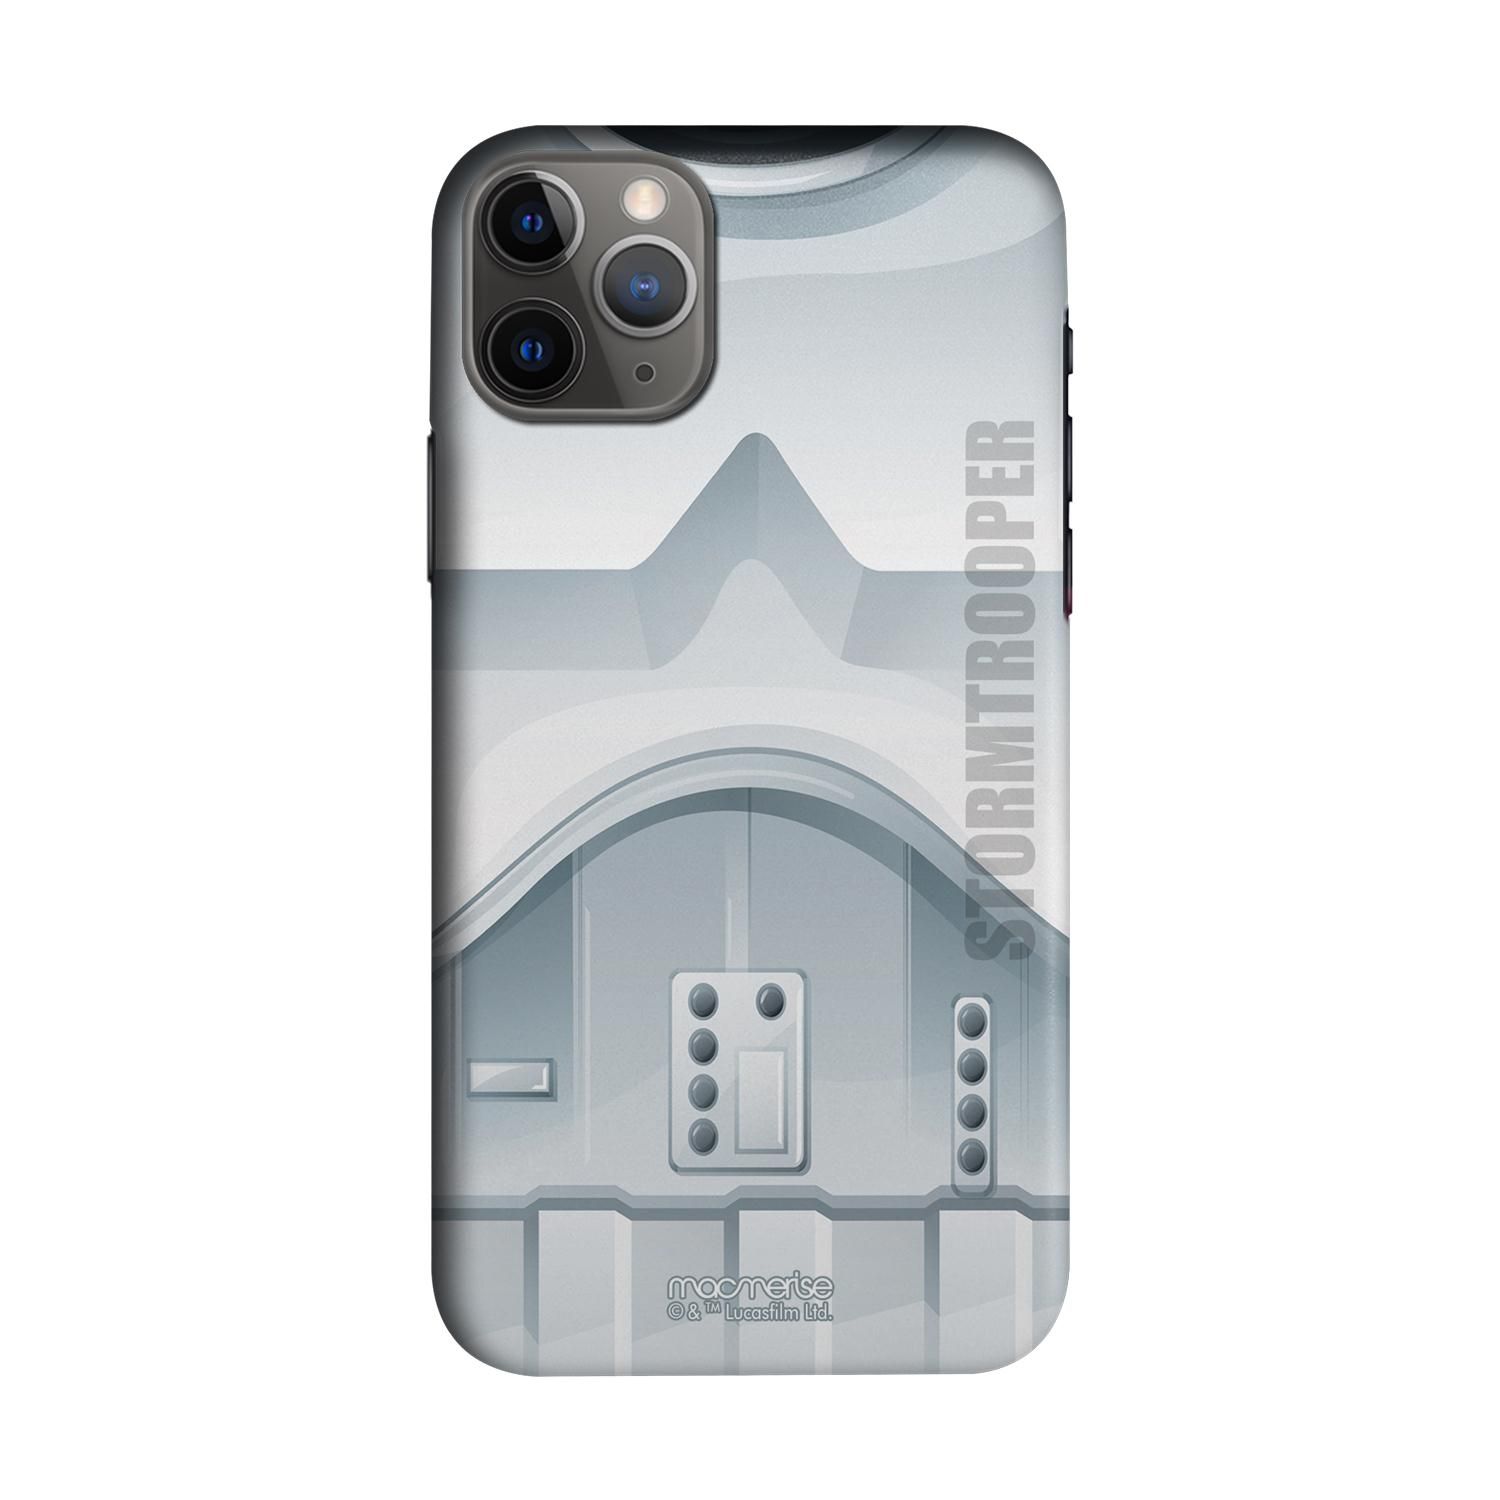 Buy Attire Trooper - Sleek Phone Case for iPhone 11 Pro Max Online